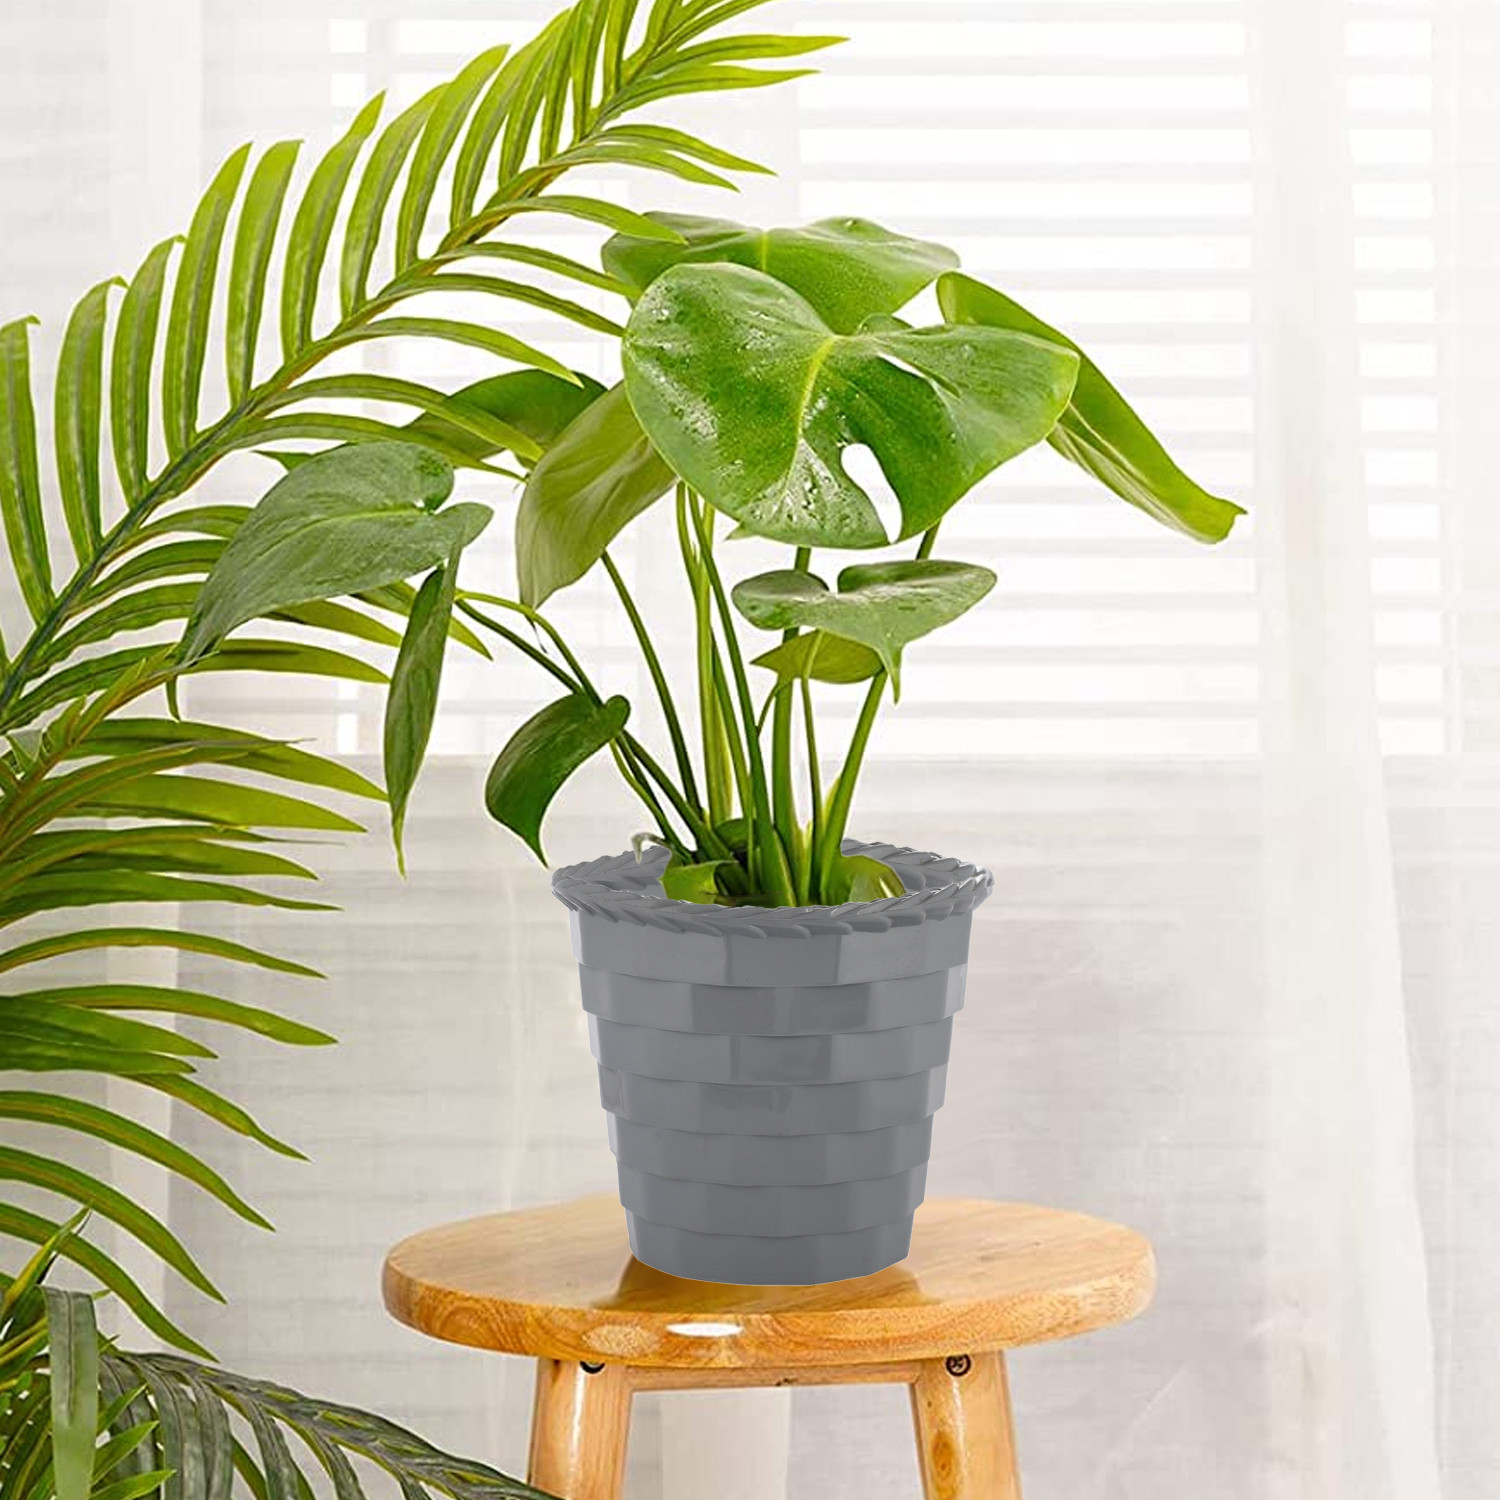 Kuber Industries Brick Flower Pot|Durable Plastic Flower Pots|Planters for Home Décor|Garden|Living Room|Balcony|6 Inch|Pack of 2 (Orange & Grey)